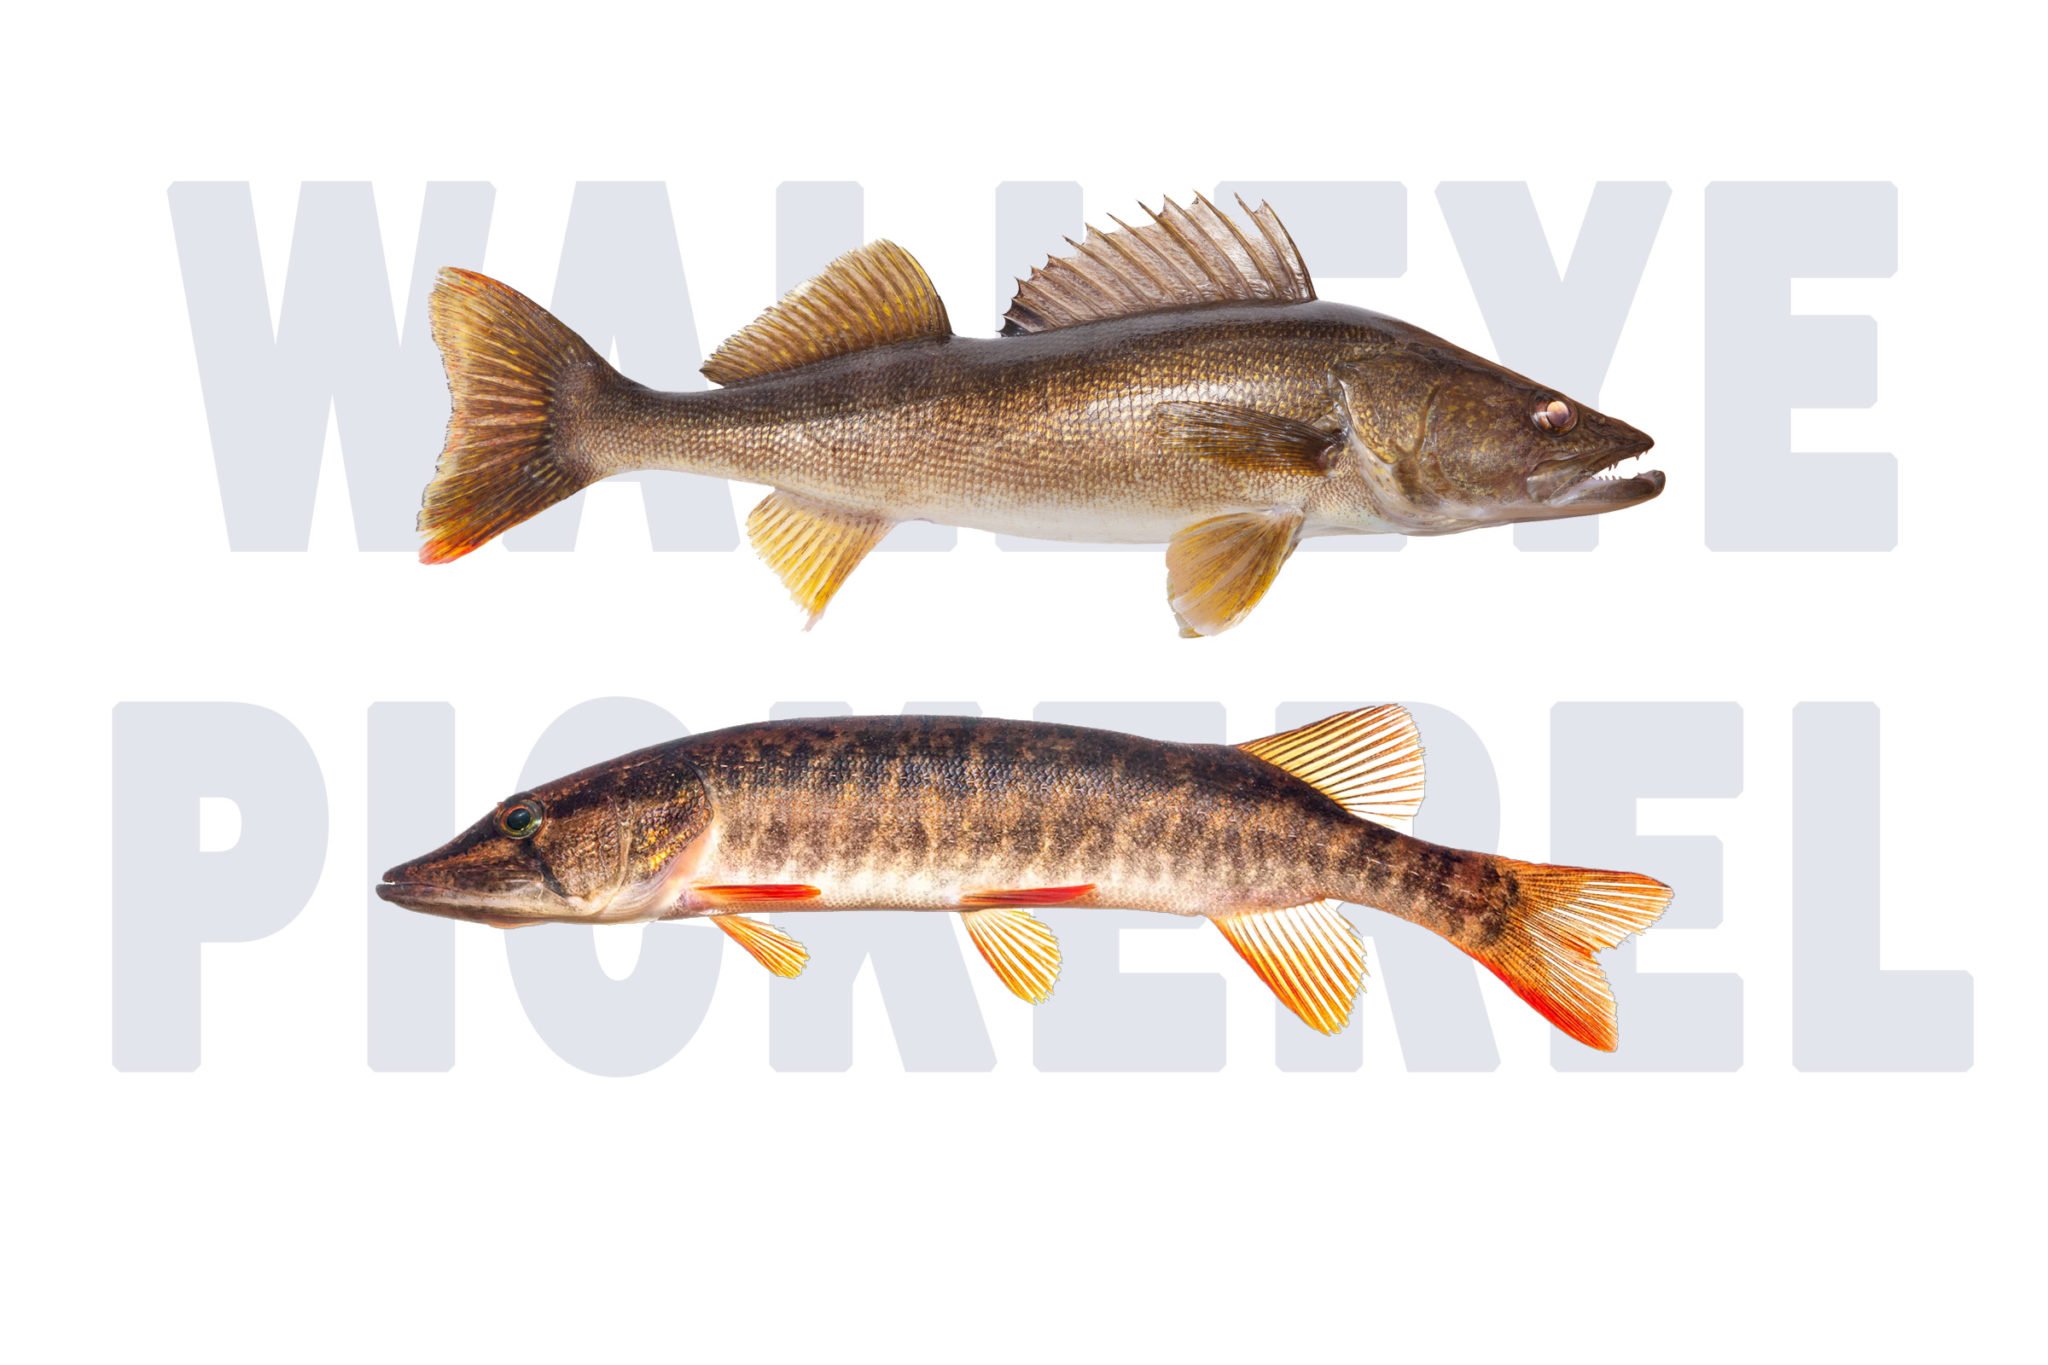 walleye versus redfin pickerel featured